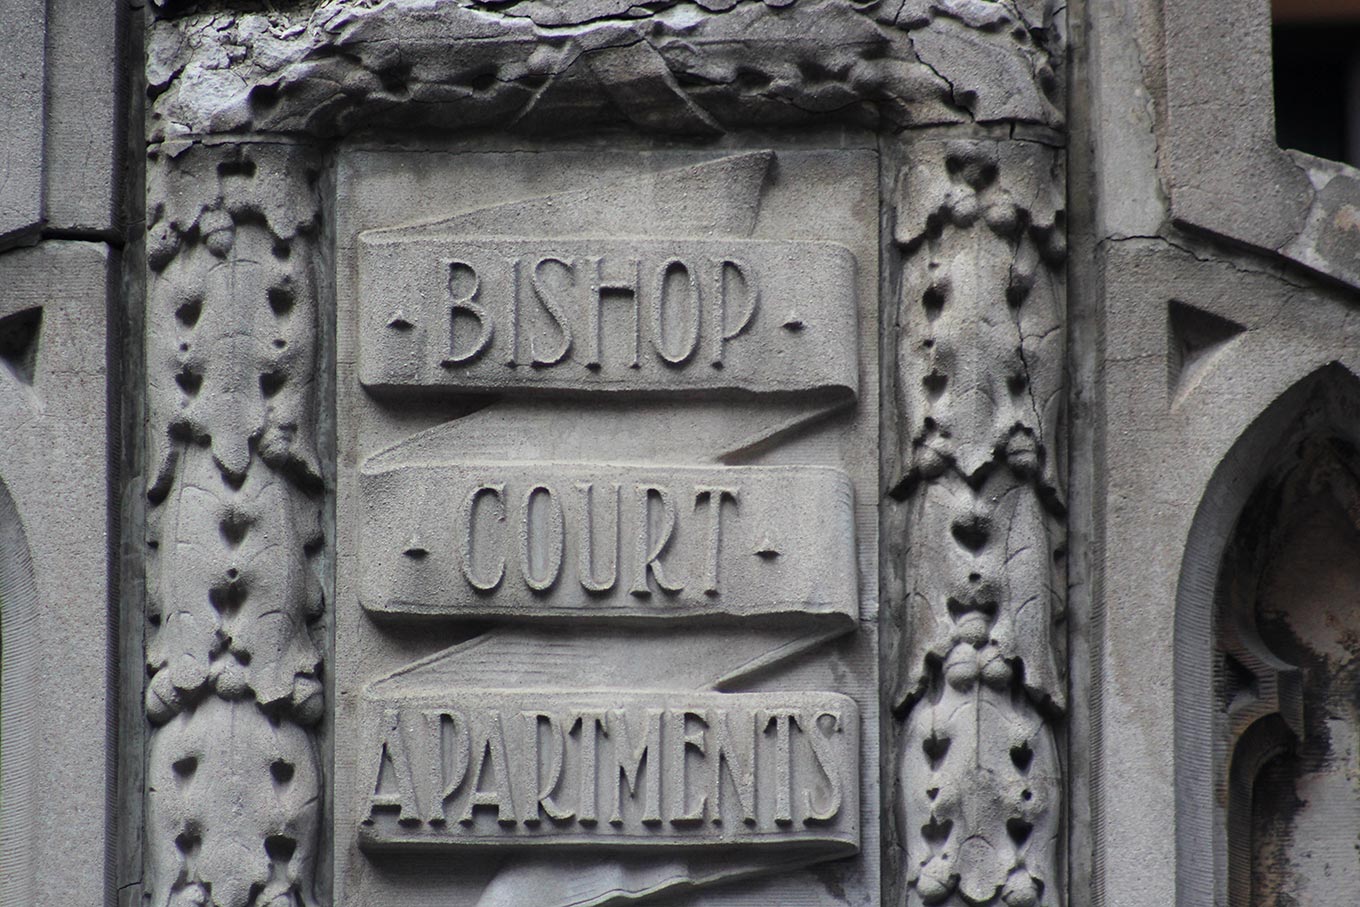 Raised sandstone inscription on the Bishop Court Apartments facade at the corner of rue Bishop and boulevard de Maisonneuve Ouest.